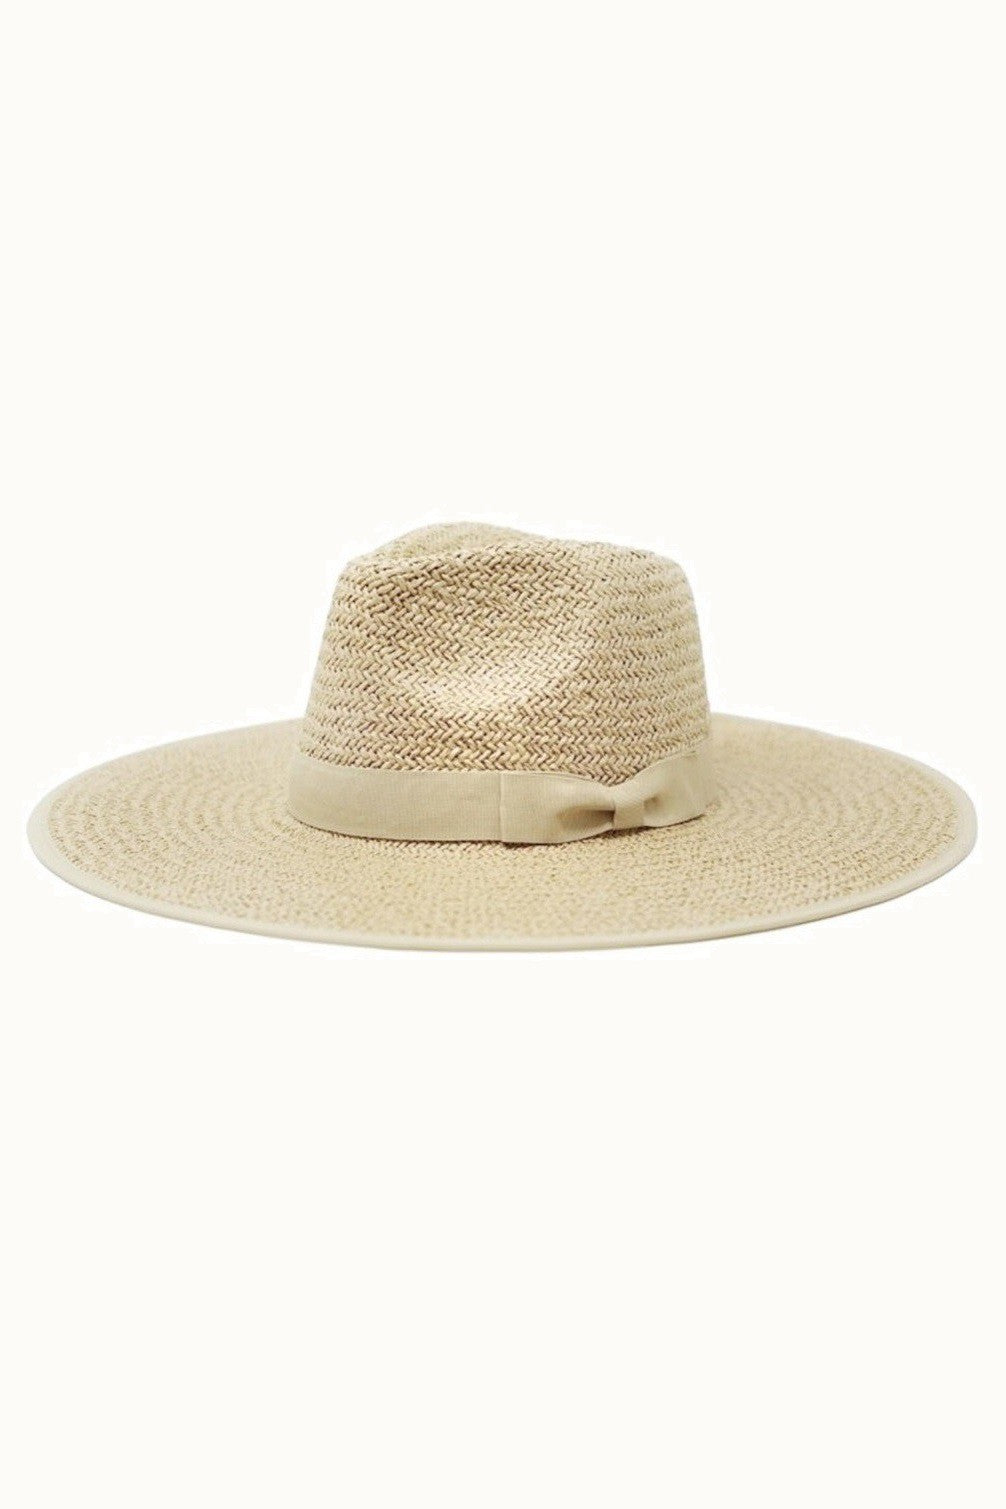 The Emilee Wide Brim Rancher Hat